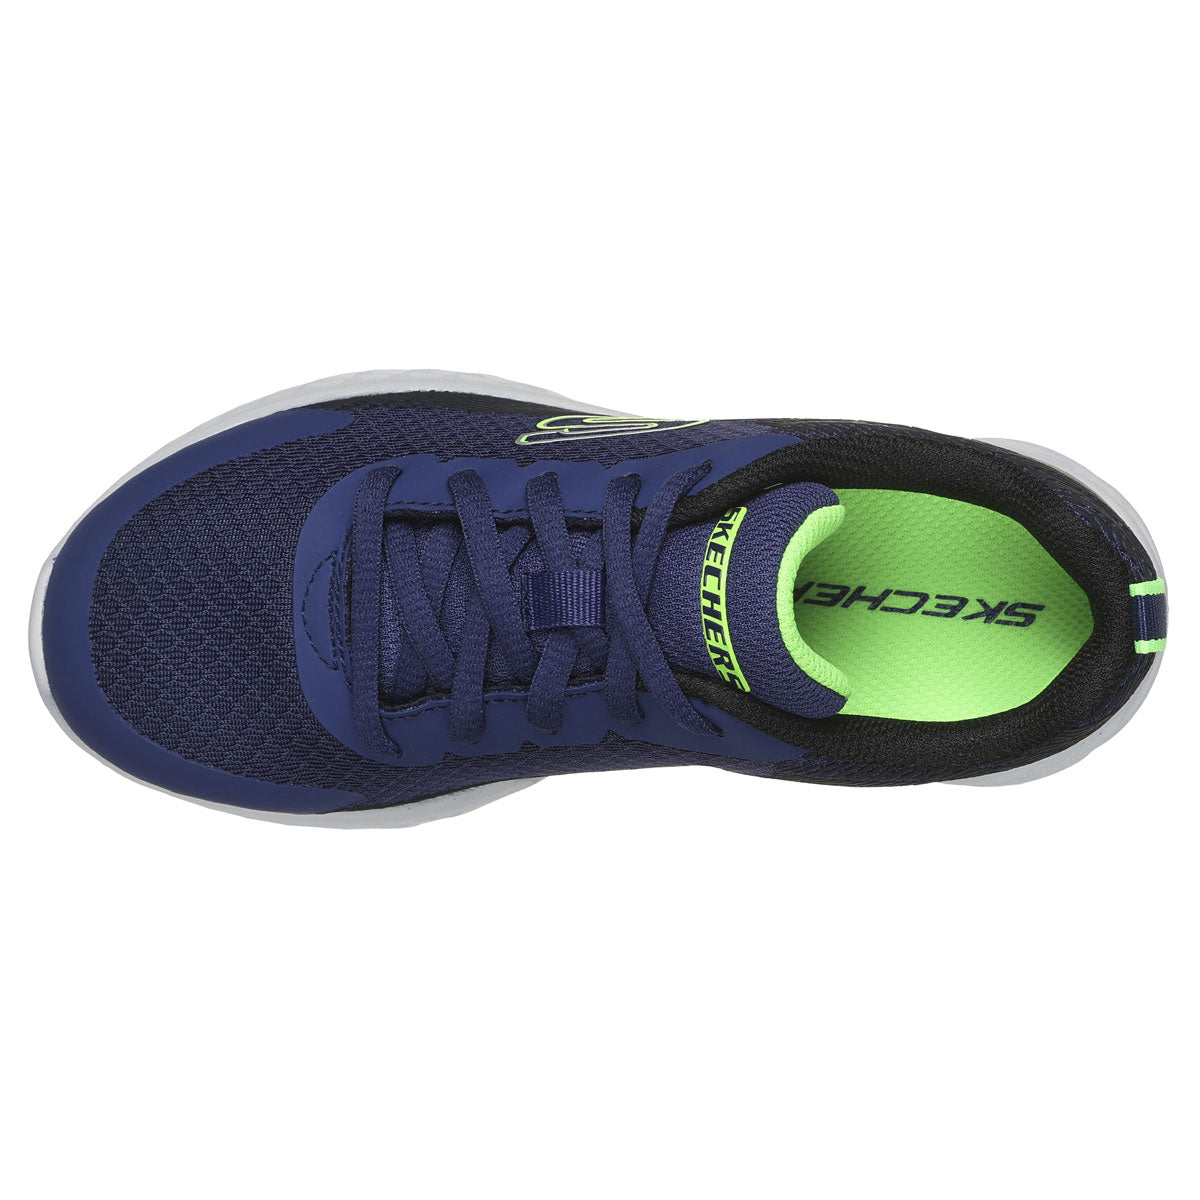 Skechers Microspec II Shoes - Boys - Navy/Black/Lime